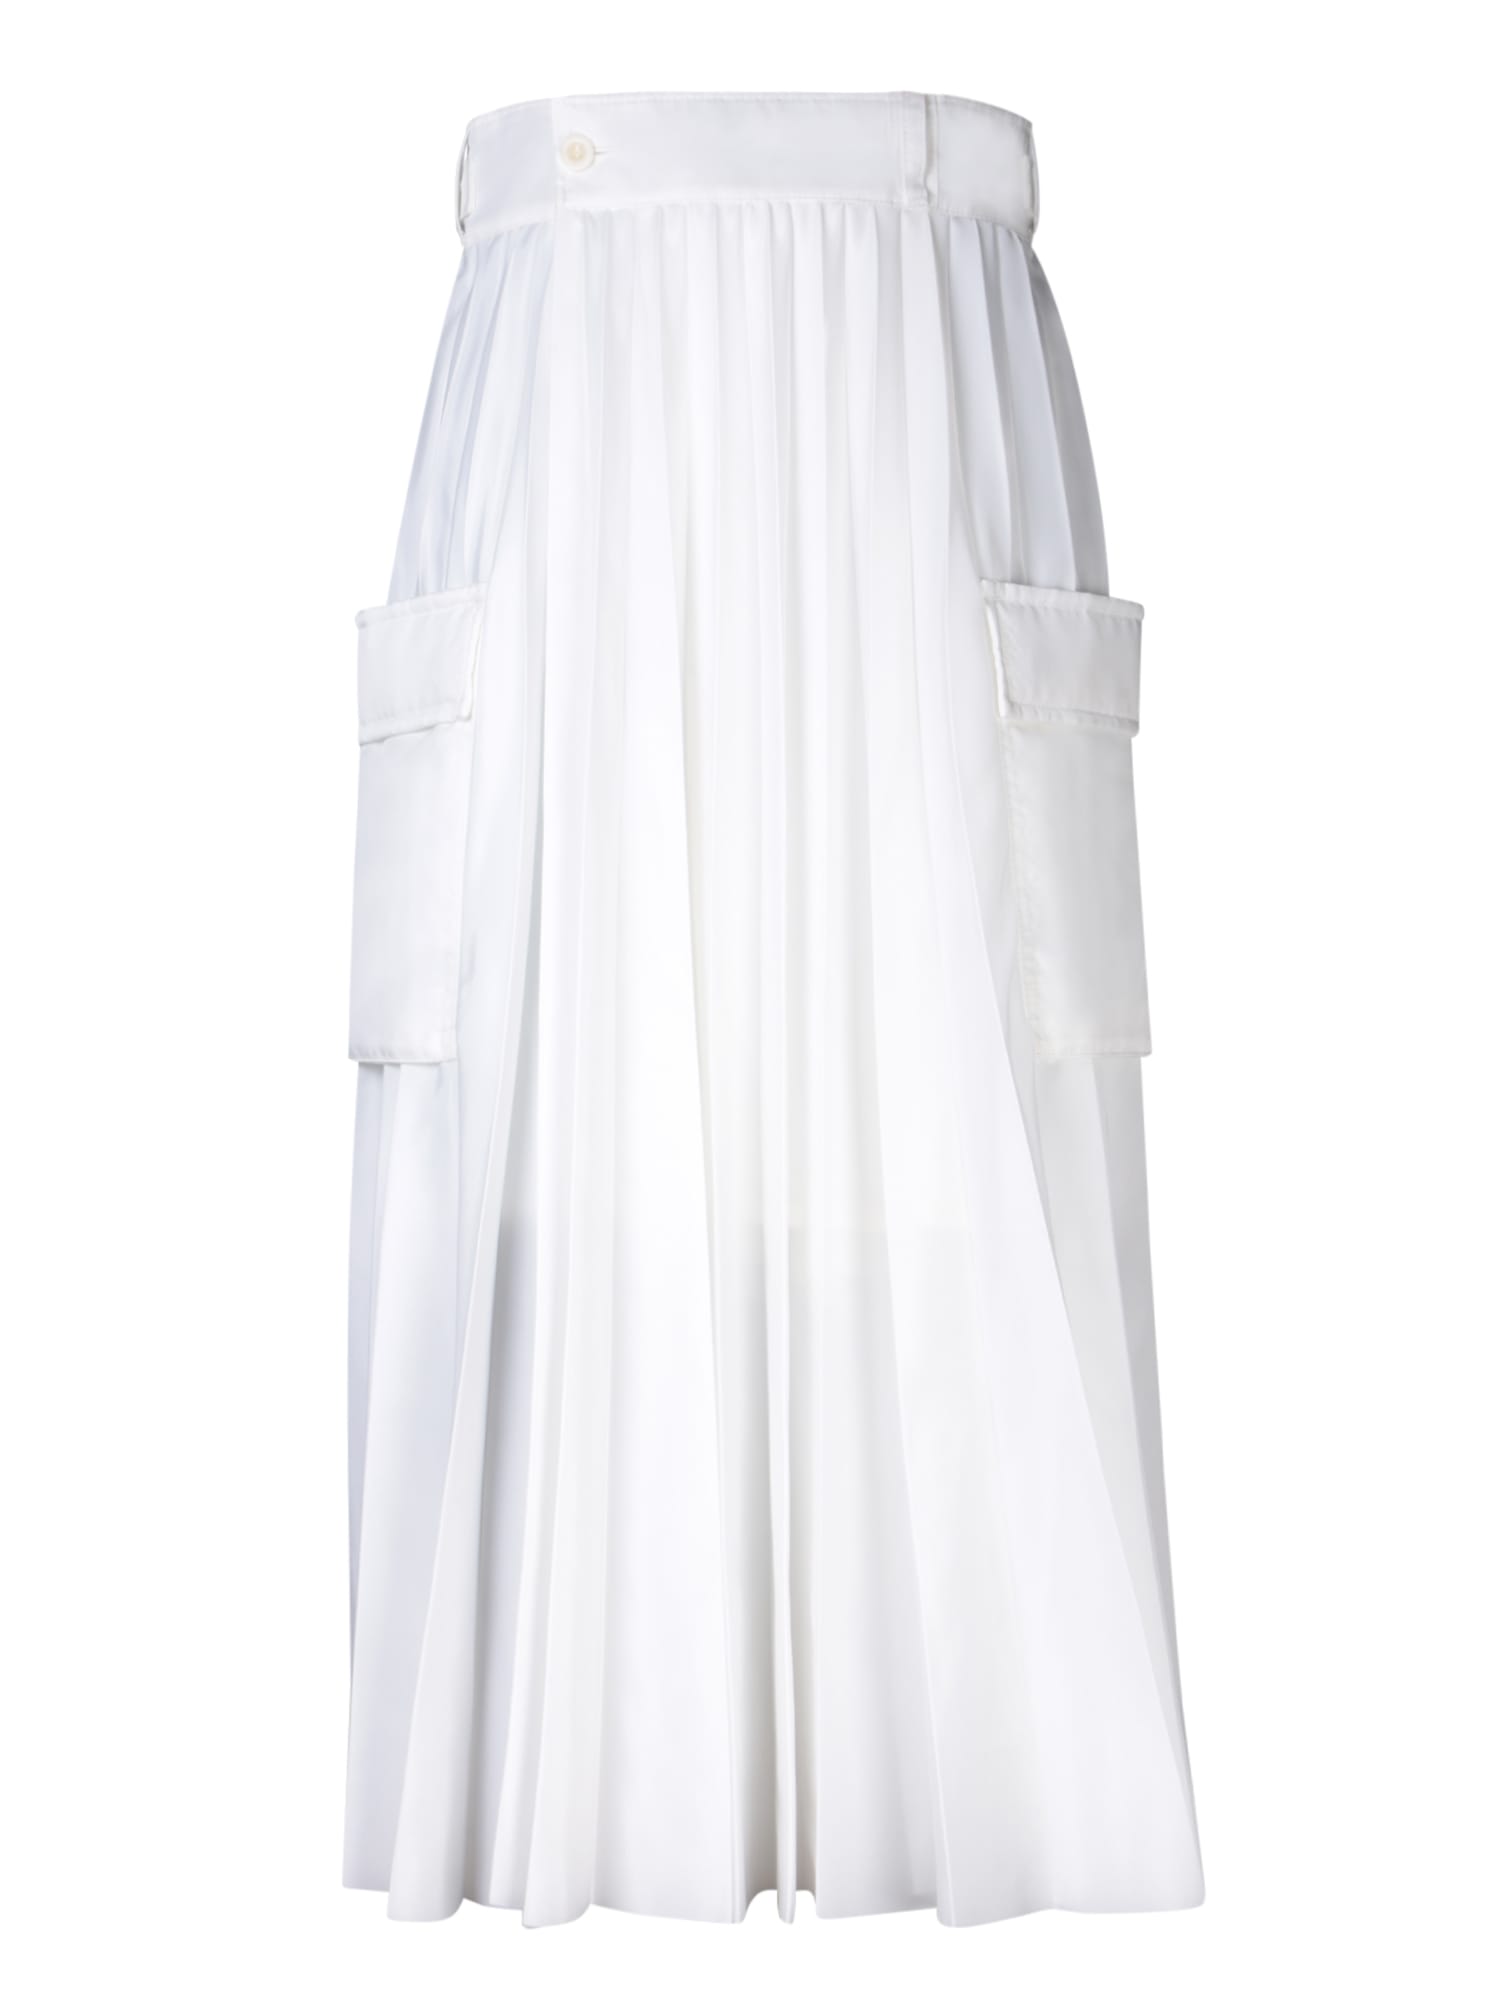 White Nylon Twill Skirt